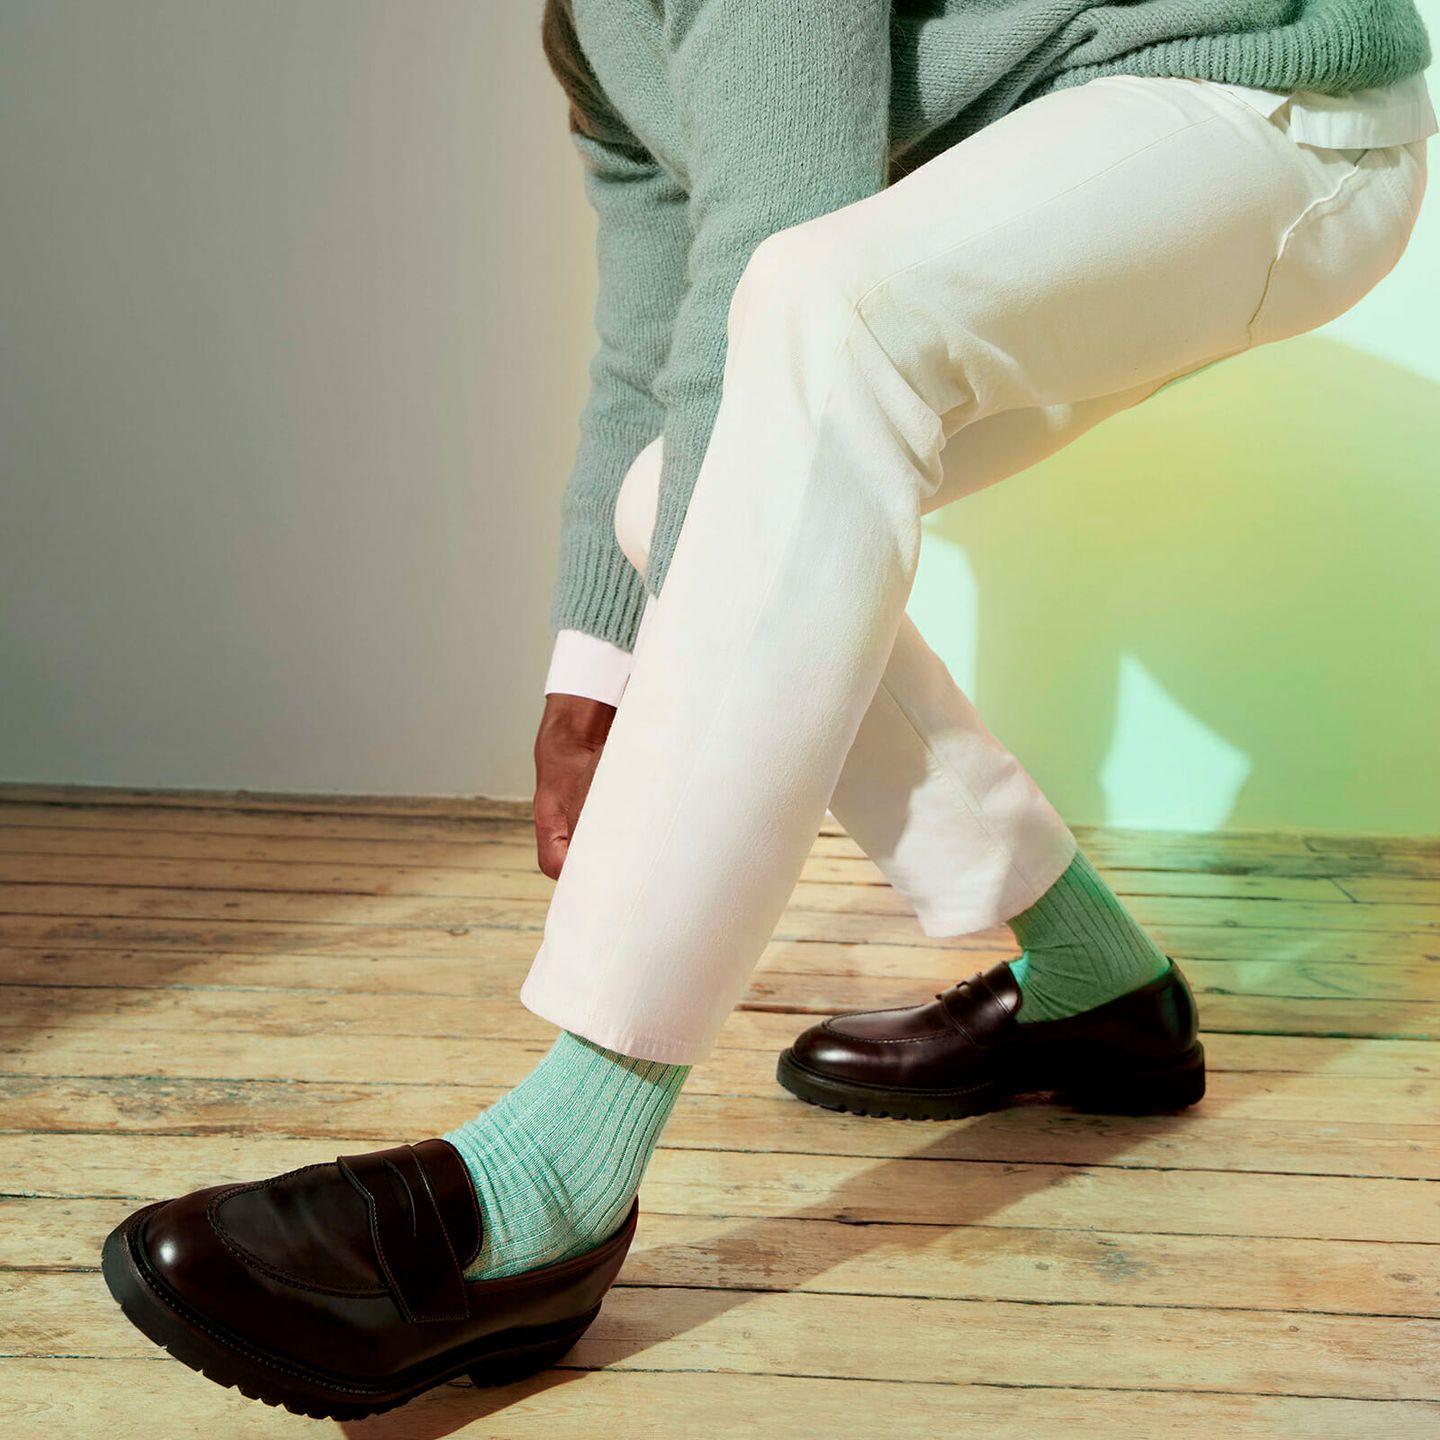 Man crouching down wearing aqua marl socks